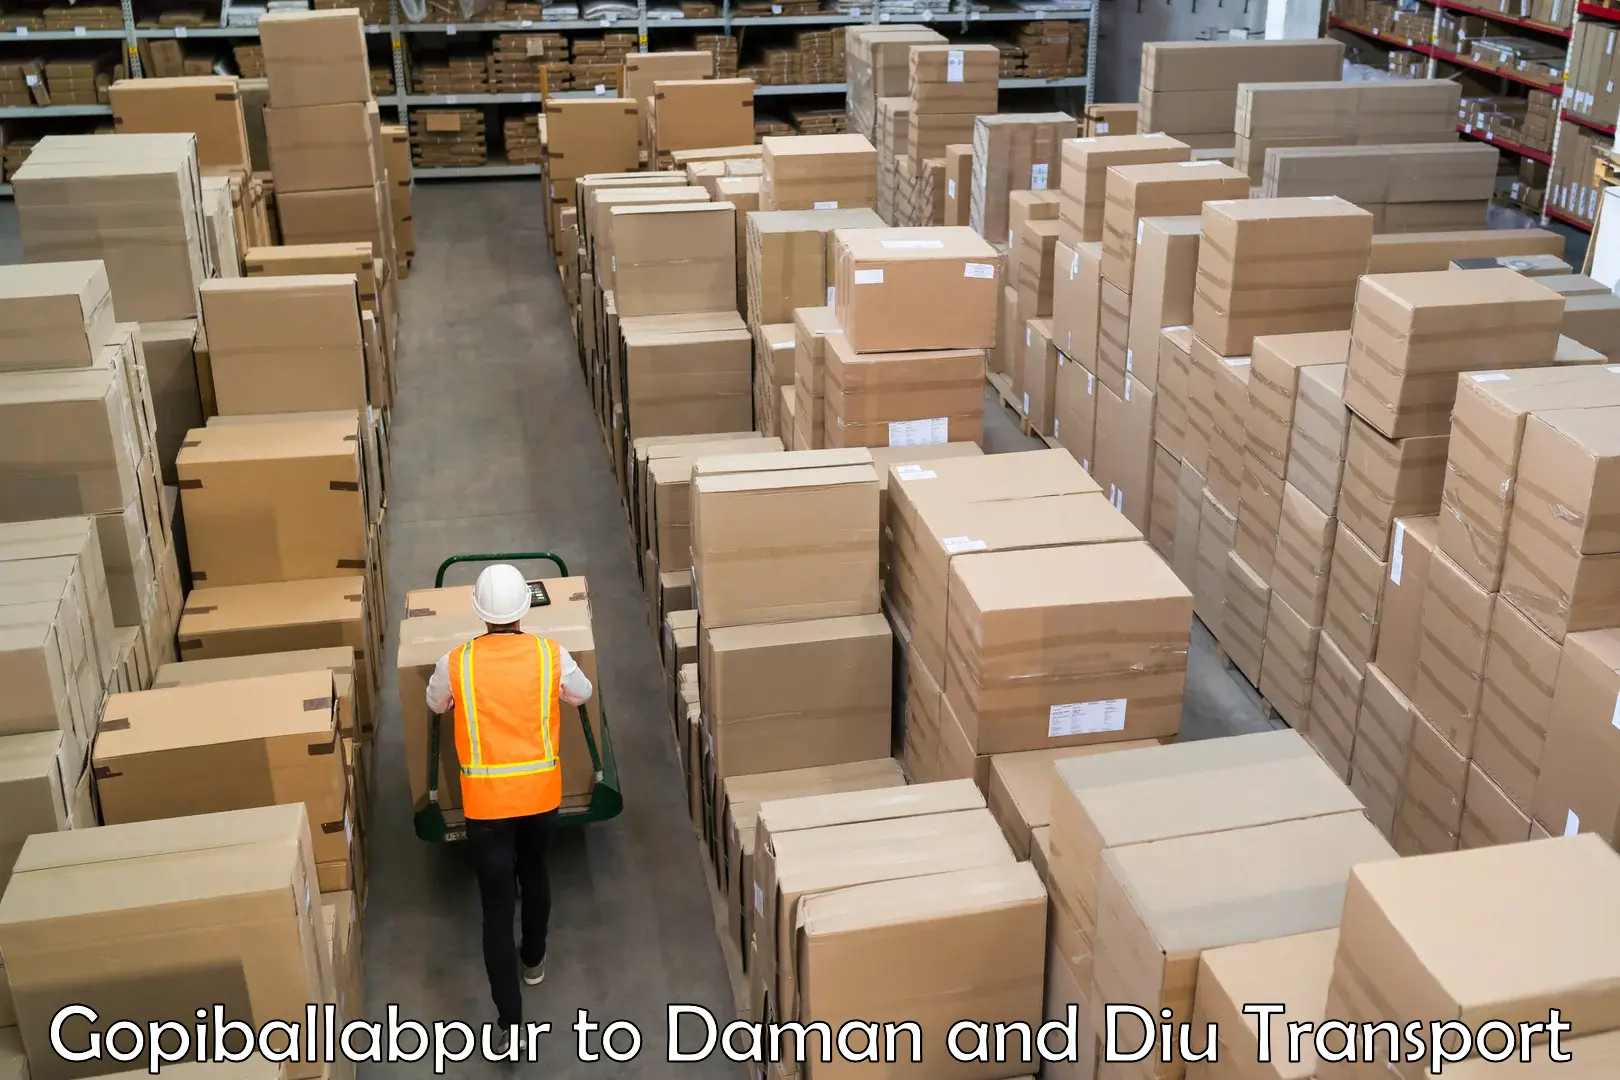 Delivery service Gopiballabpur to Daman and Diu